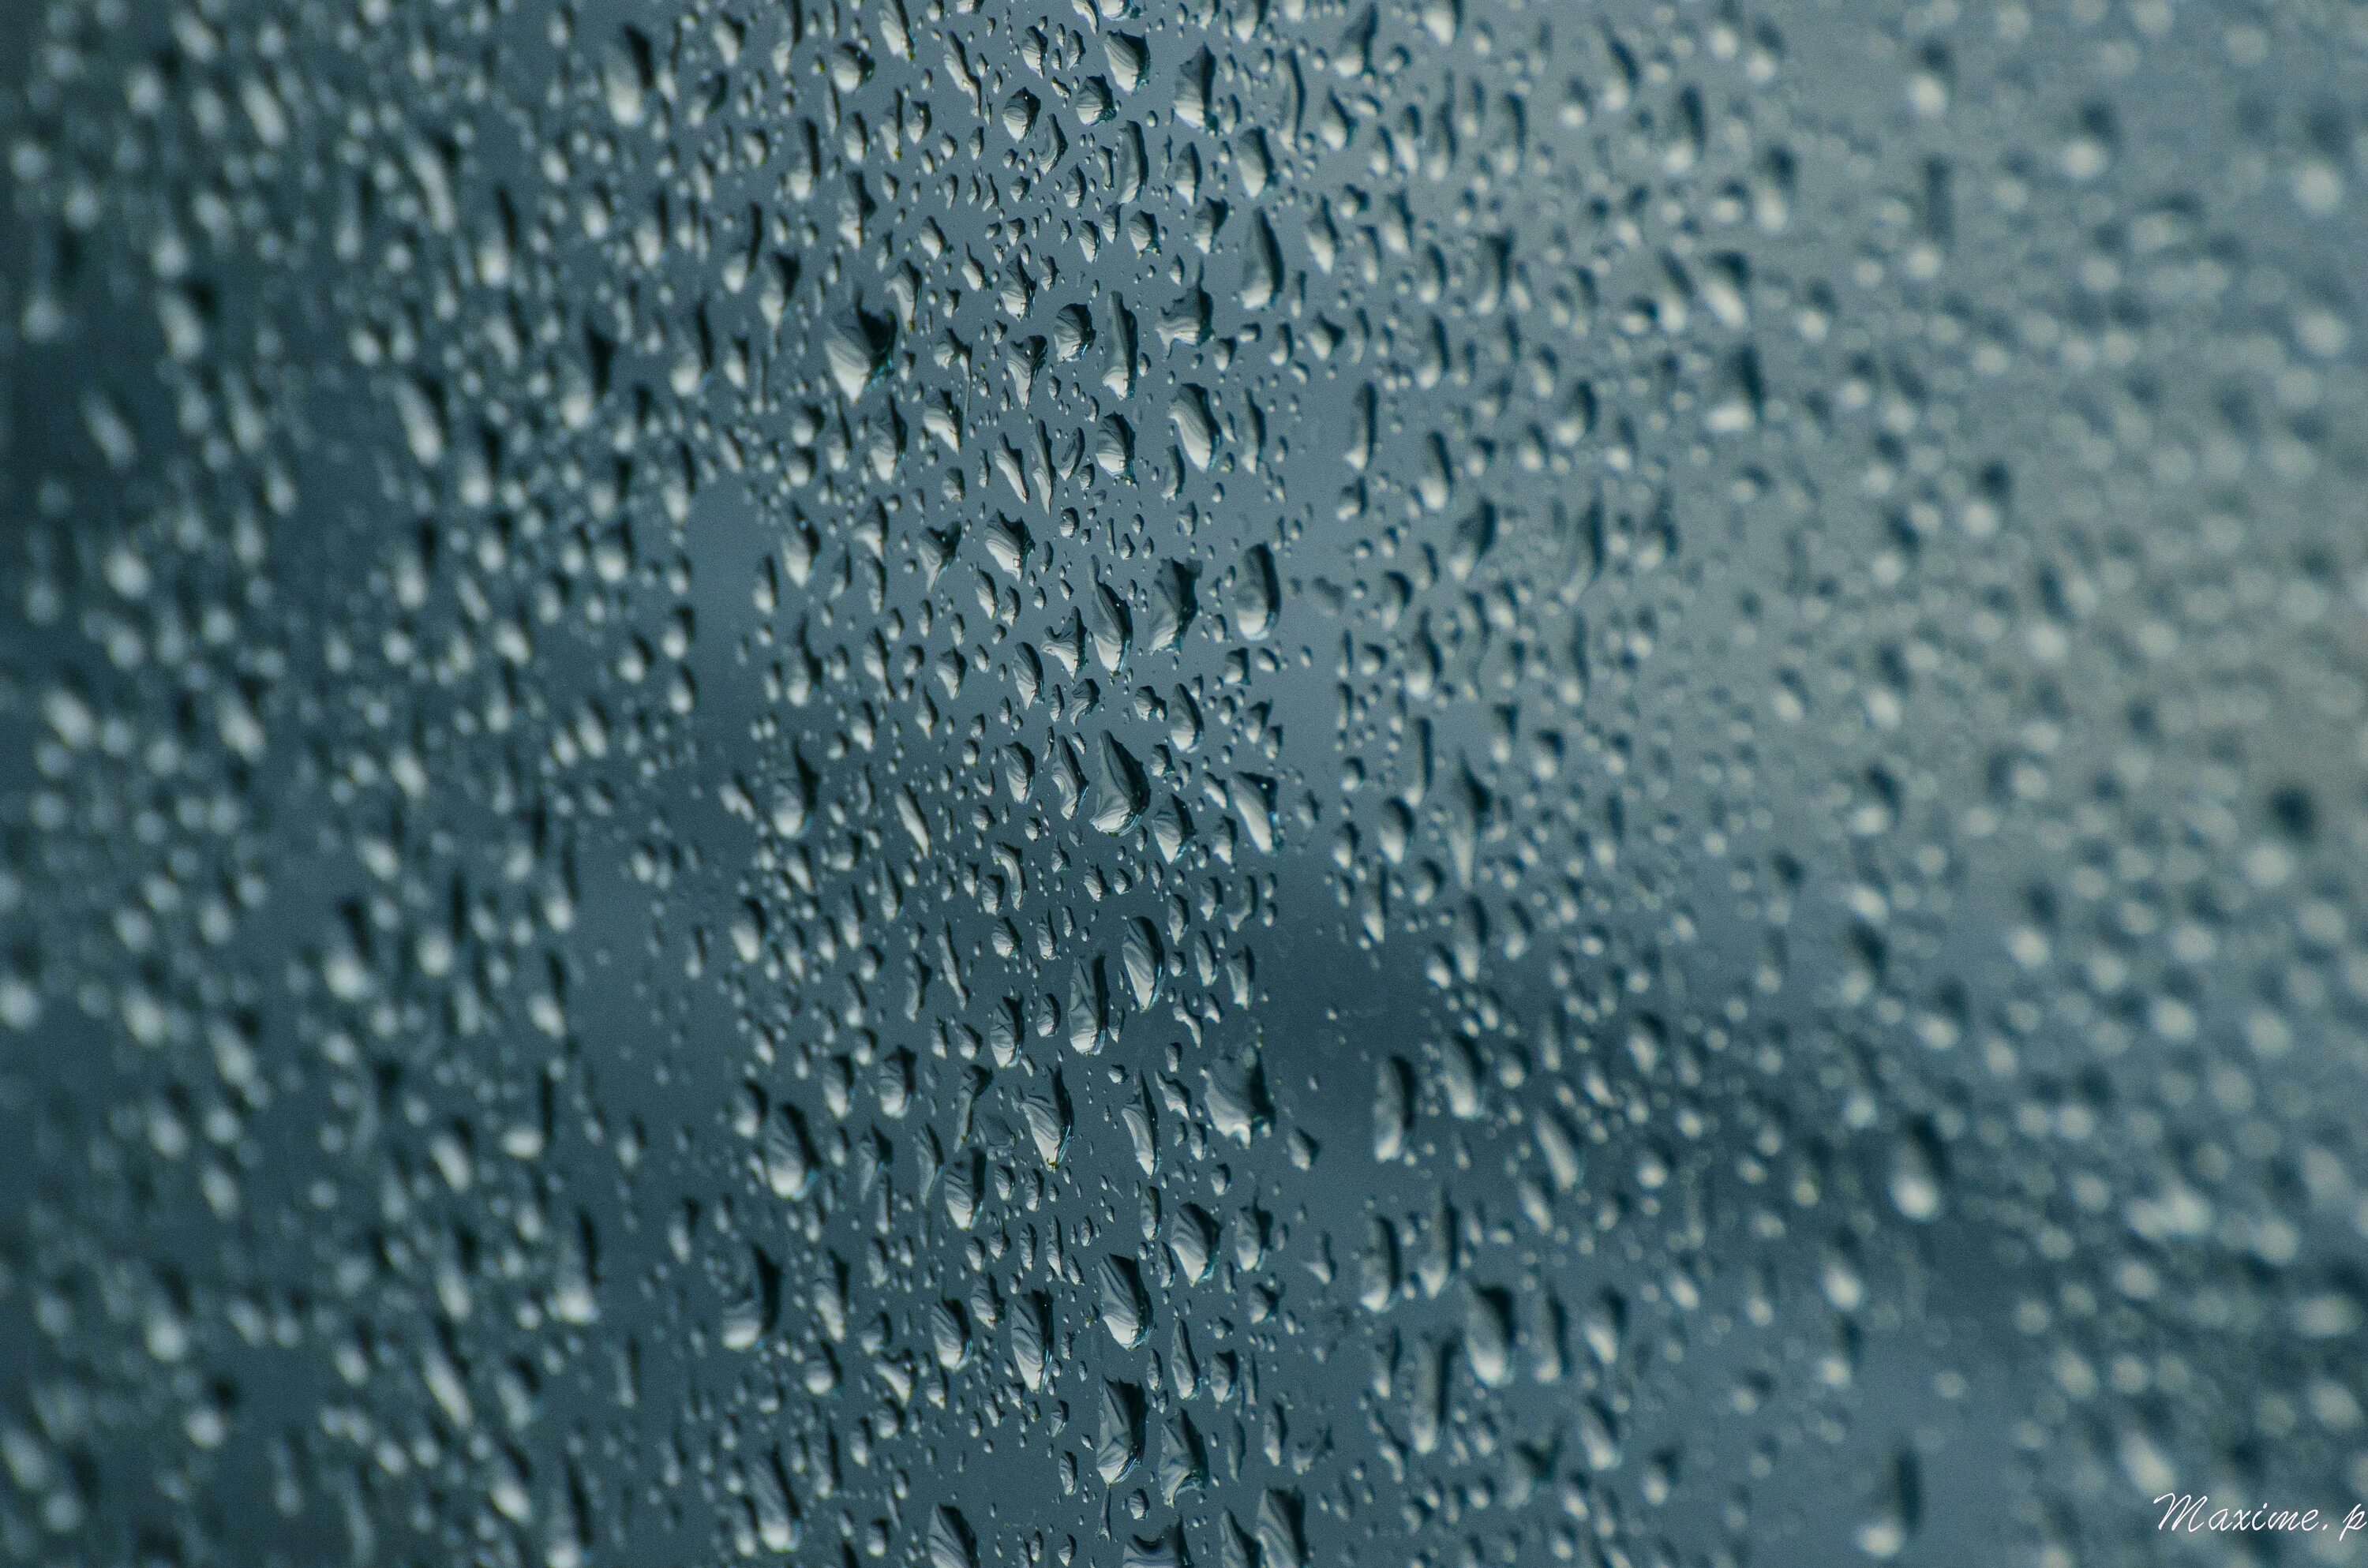 Капли на стекле. Текстура мокрого стекла. Капли дождя на стекле. Капли воды на поверхности.